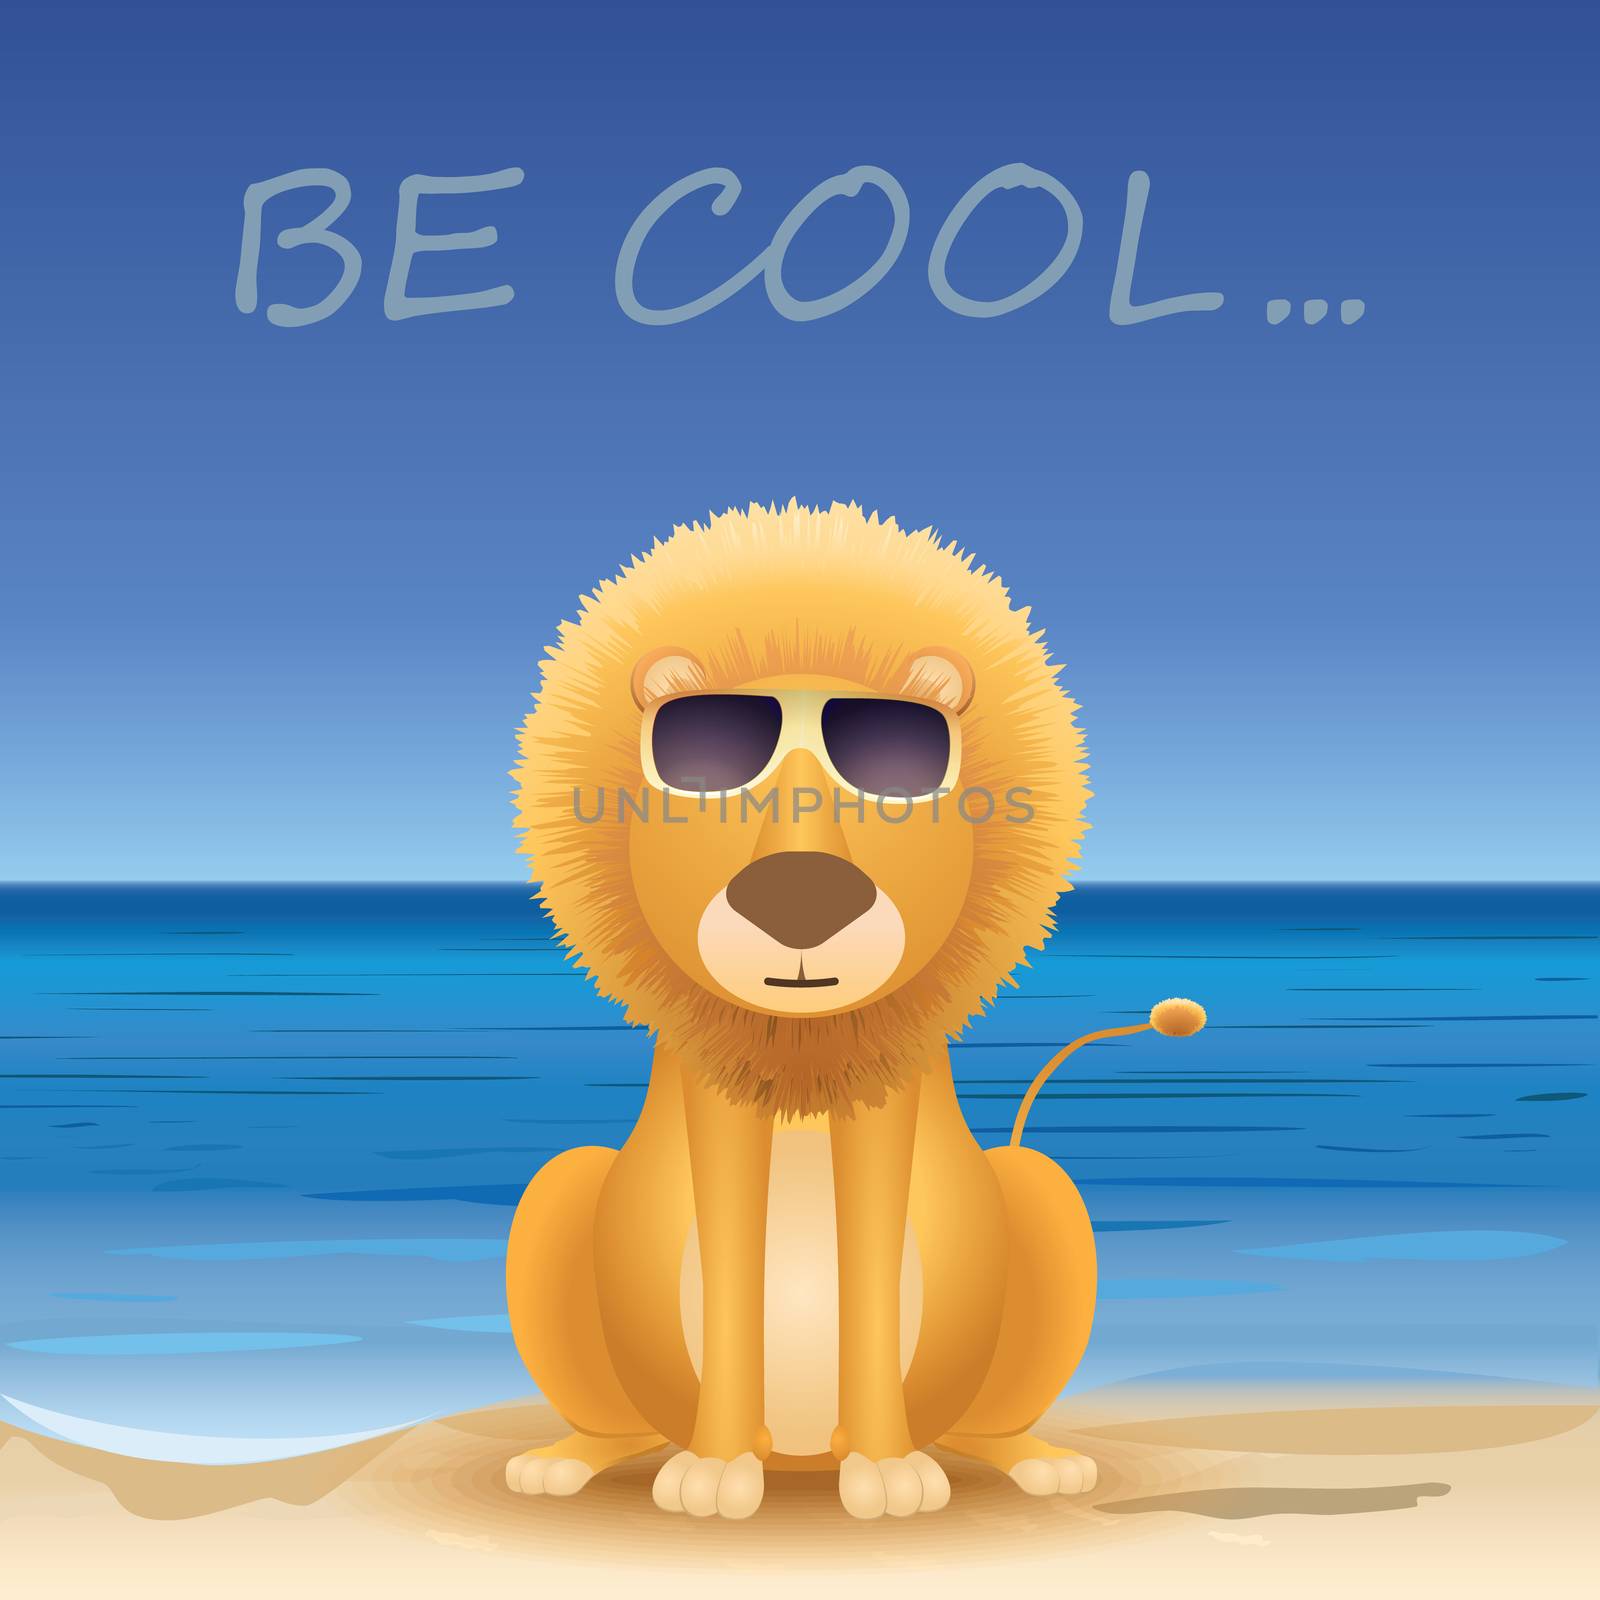 Cartoon lion sitting on beach, text Be cool.